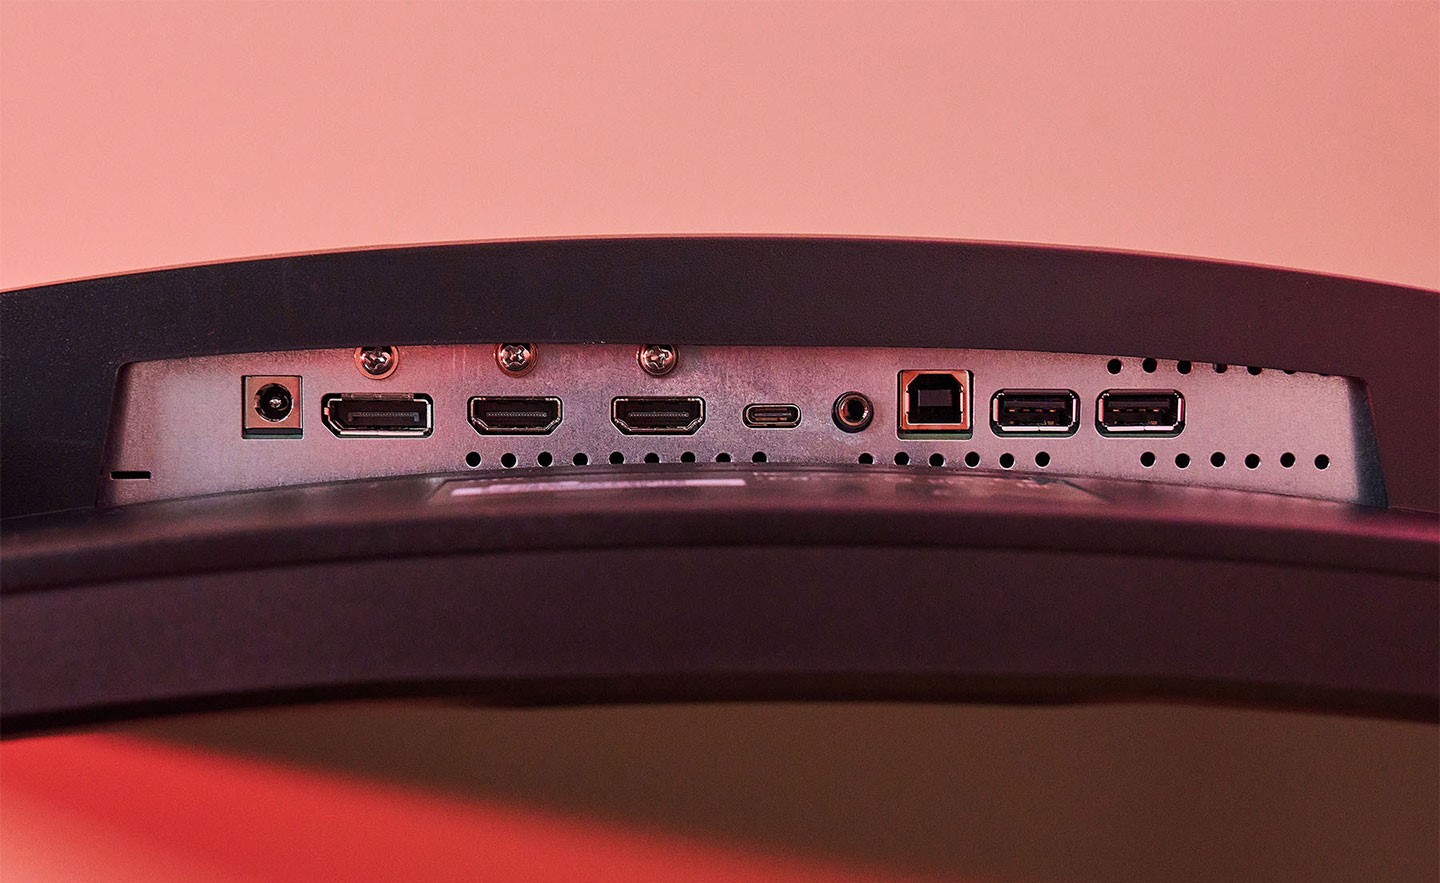 MAG 275CQRF-QD 的連結埠集於機身底側，包括電源接口、DisplayPort、兩組 HDMI、USB Type-C、3.5mm 音源輸出、USB Type-B（連結至電腦使用）與兩組擴充的 USB Type-A 埠。